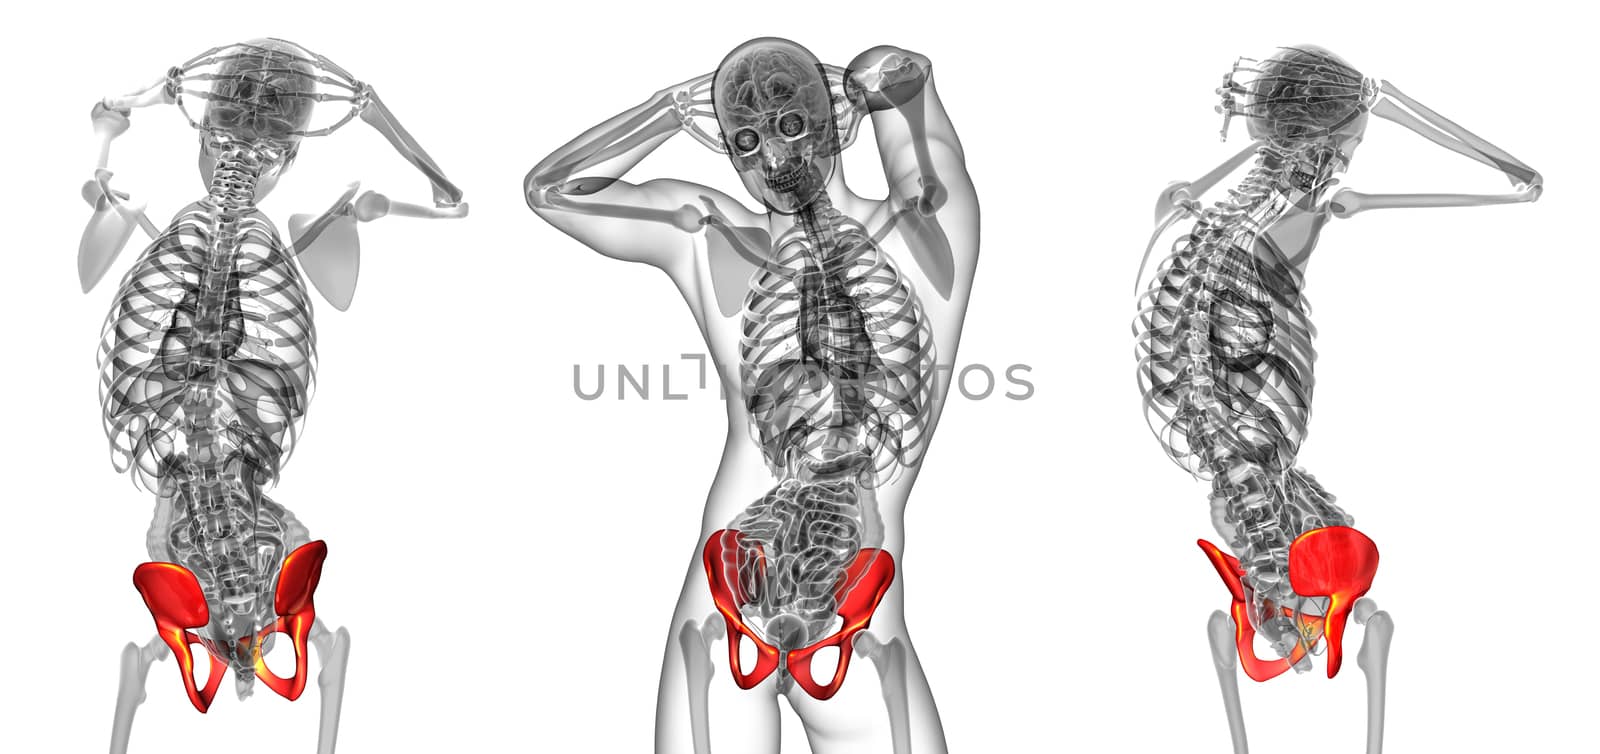 3d rendering medical illustration of the pelvis bone by maya2008